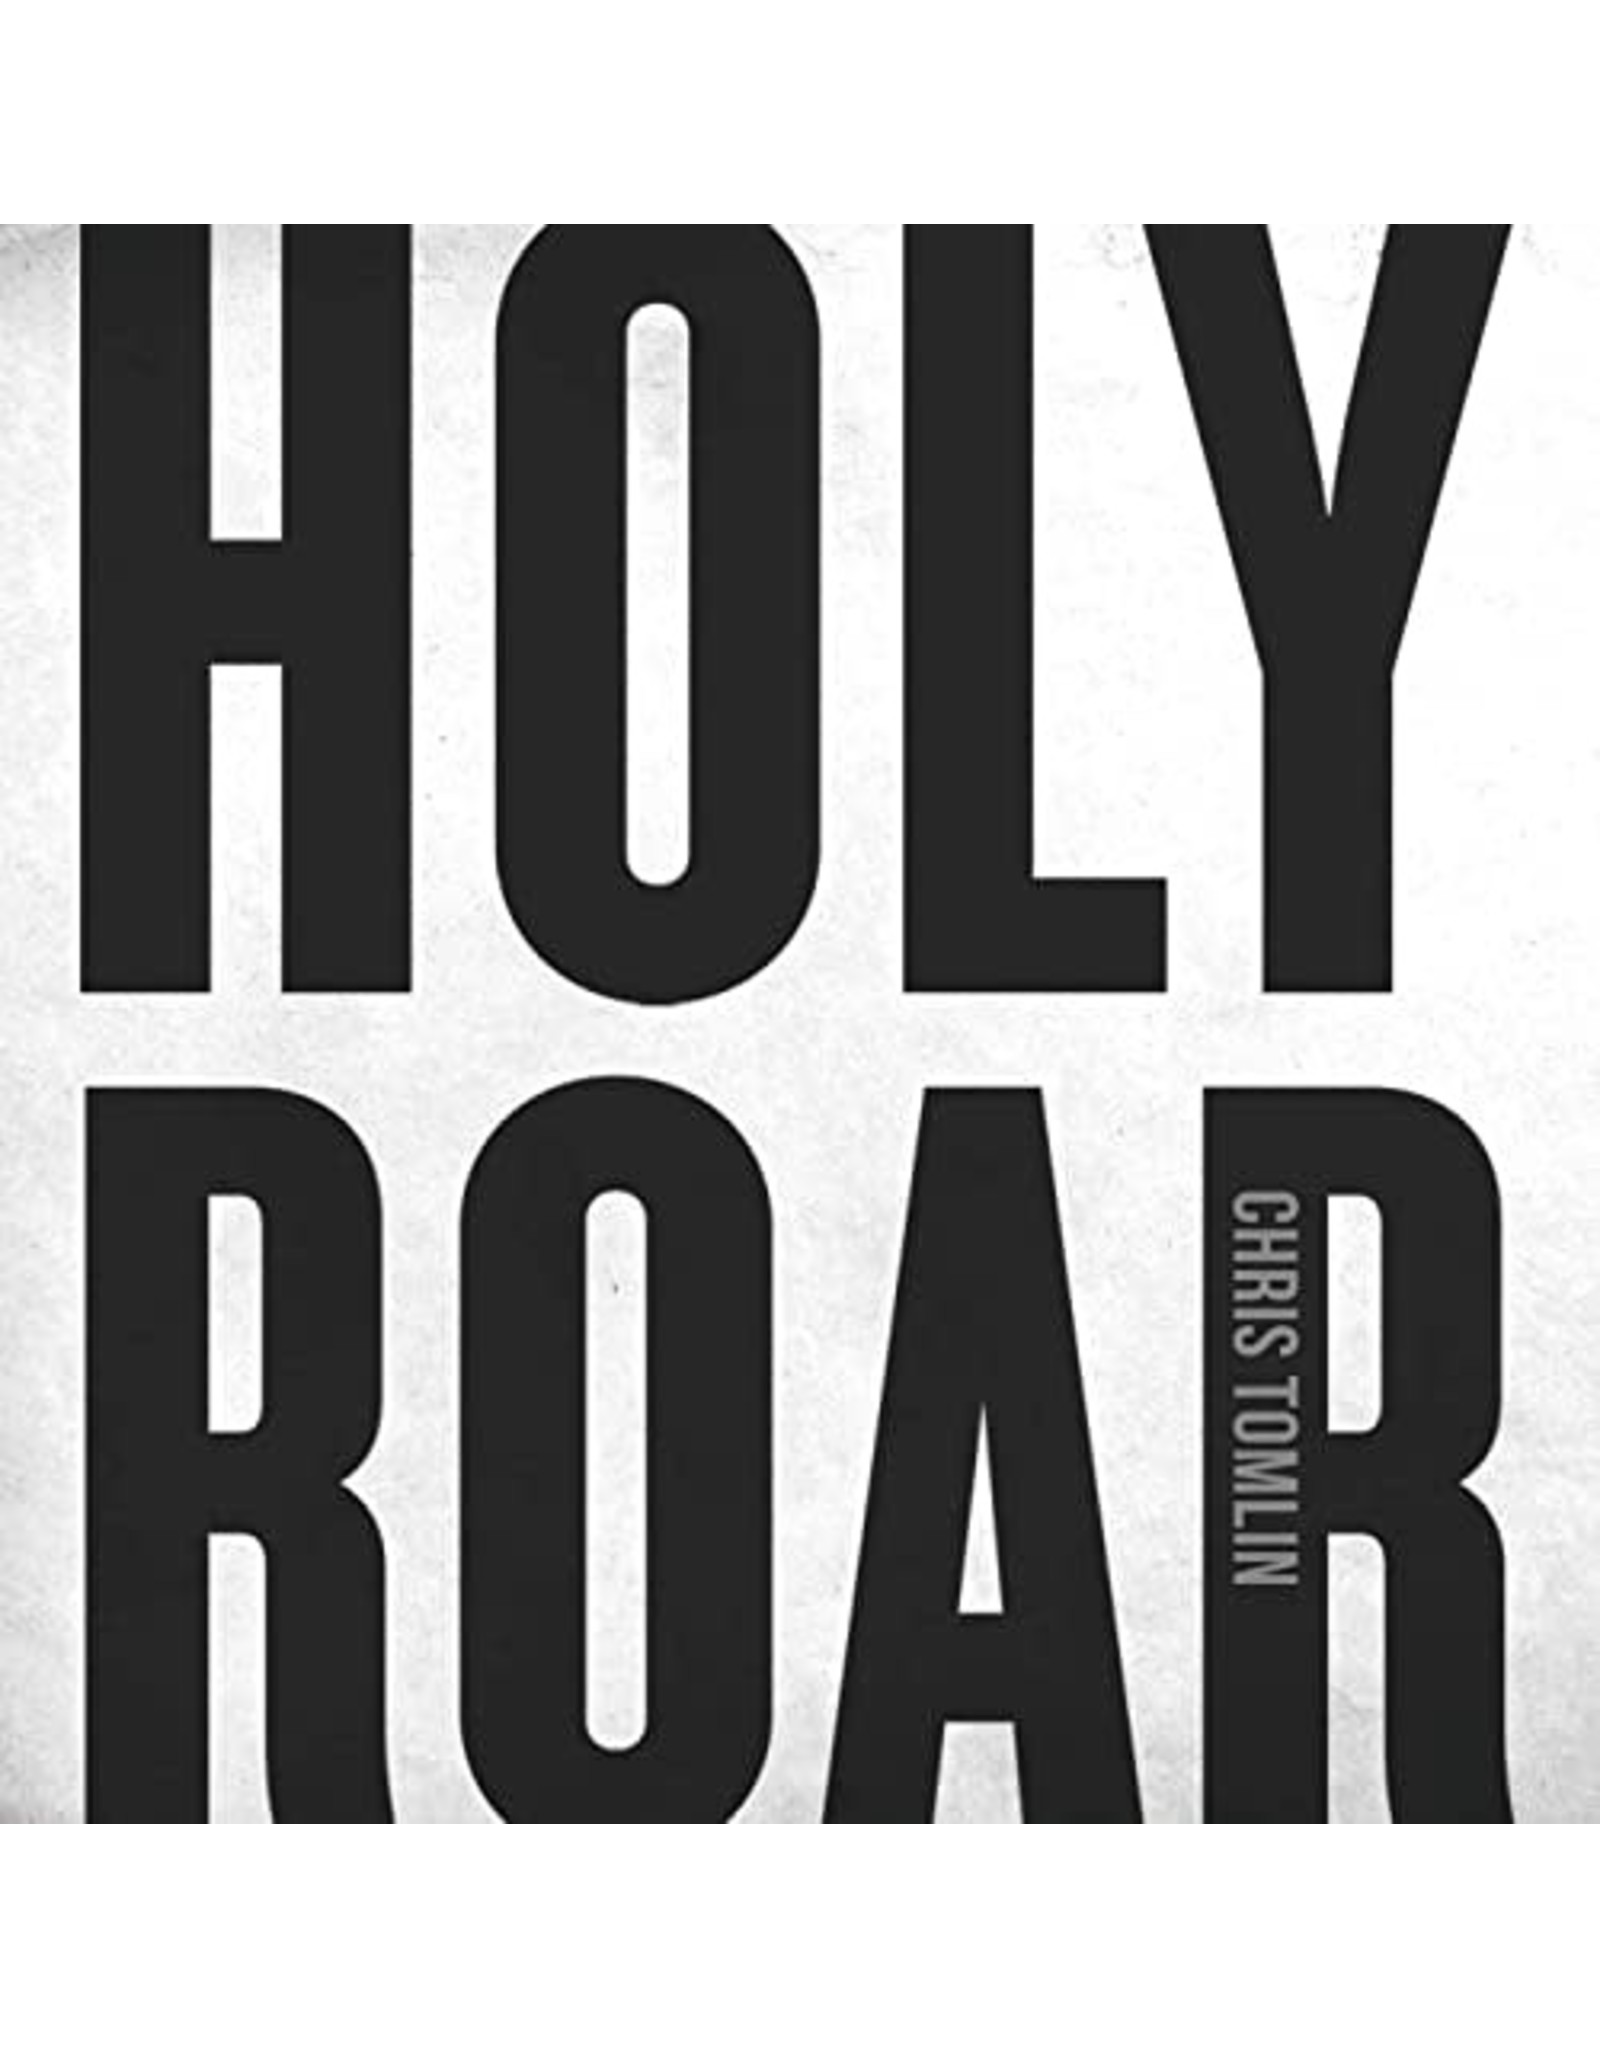 Holy Roar by Christ Tomlin (CD)